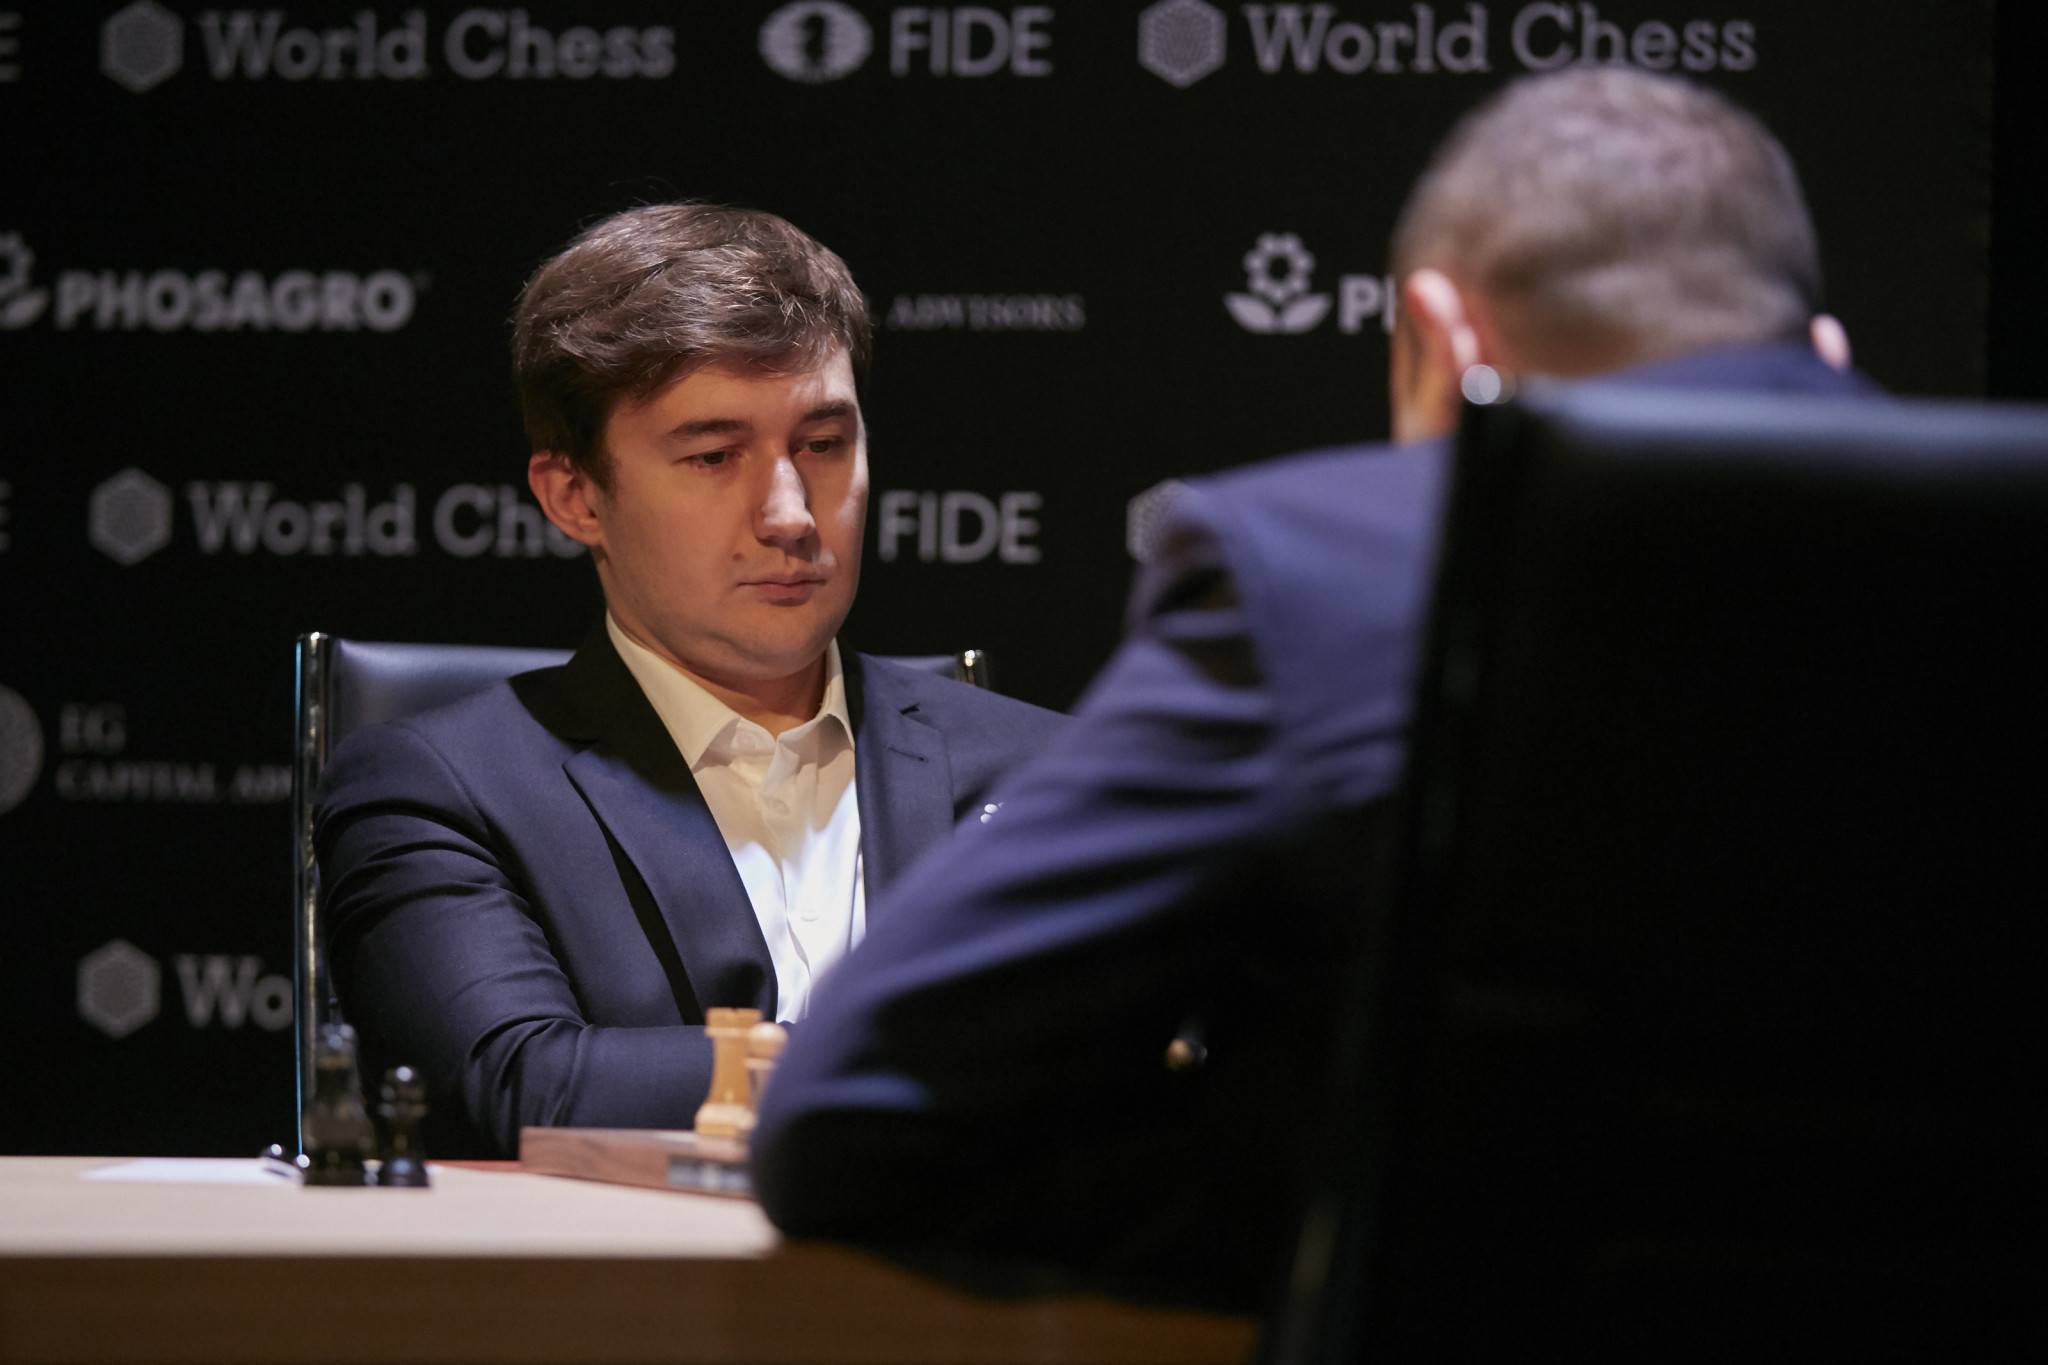 Russian chess grandmaster Karjakin plans to file appeal against FIDE suspension